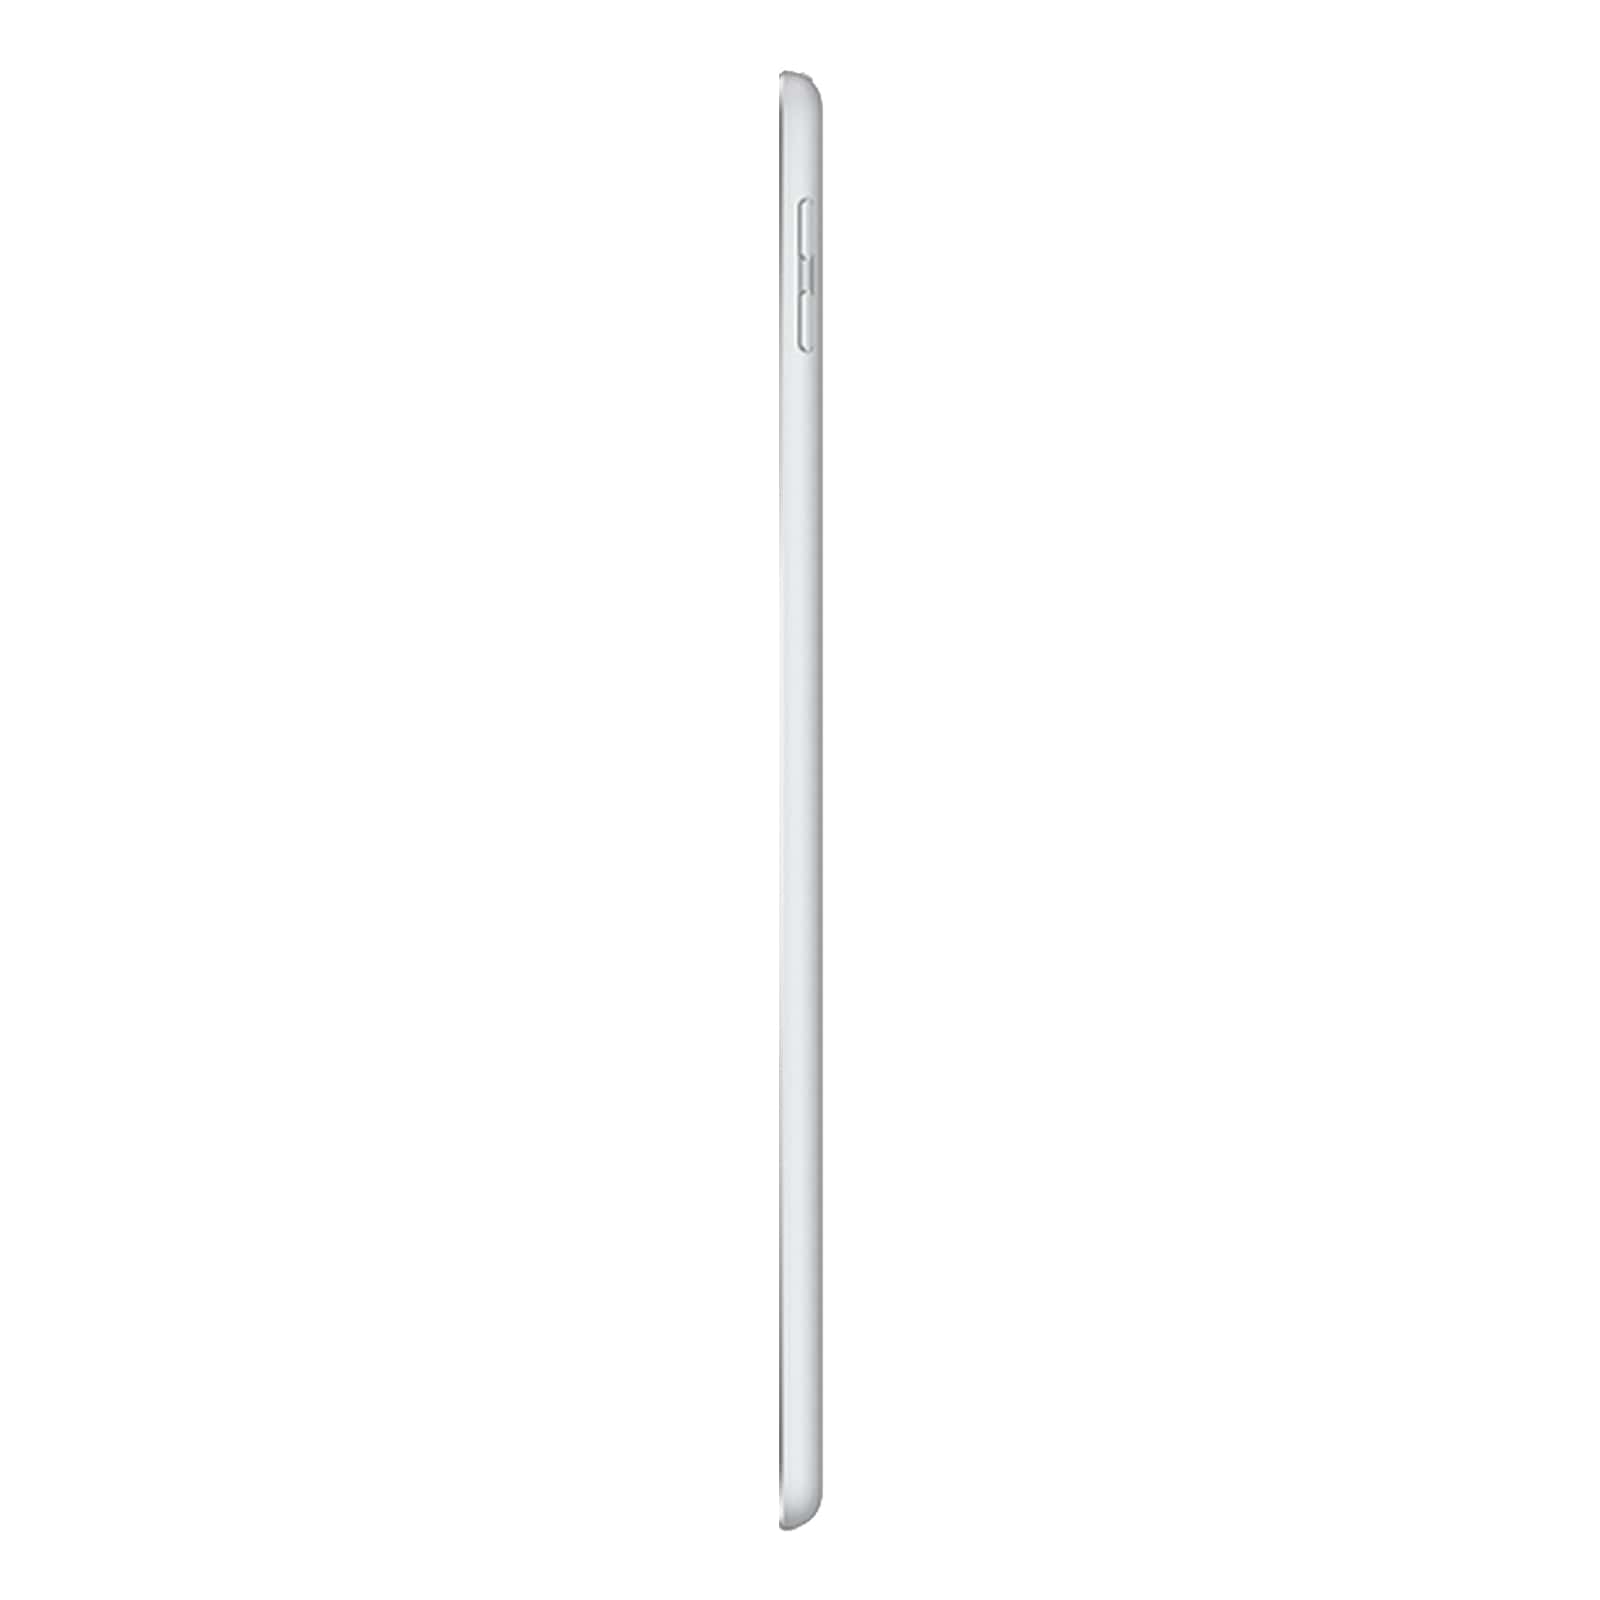 Apple iPad 6 128GB WiFi Argento Molto Buono